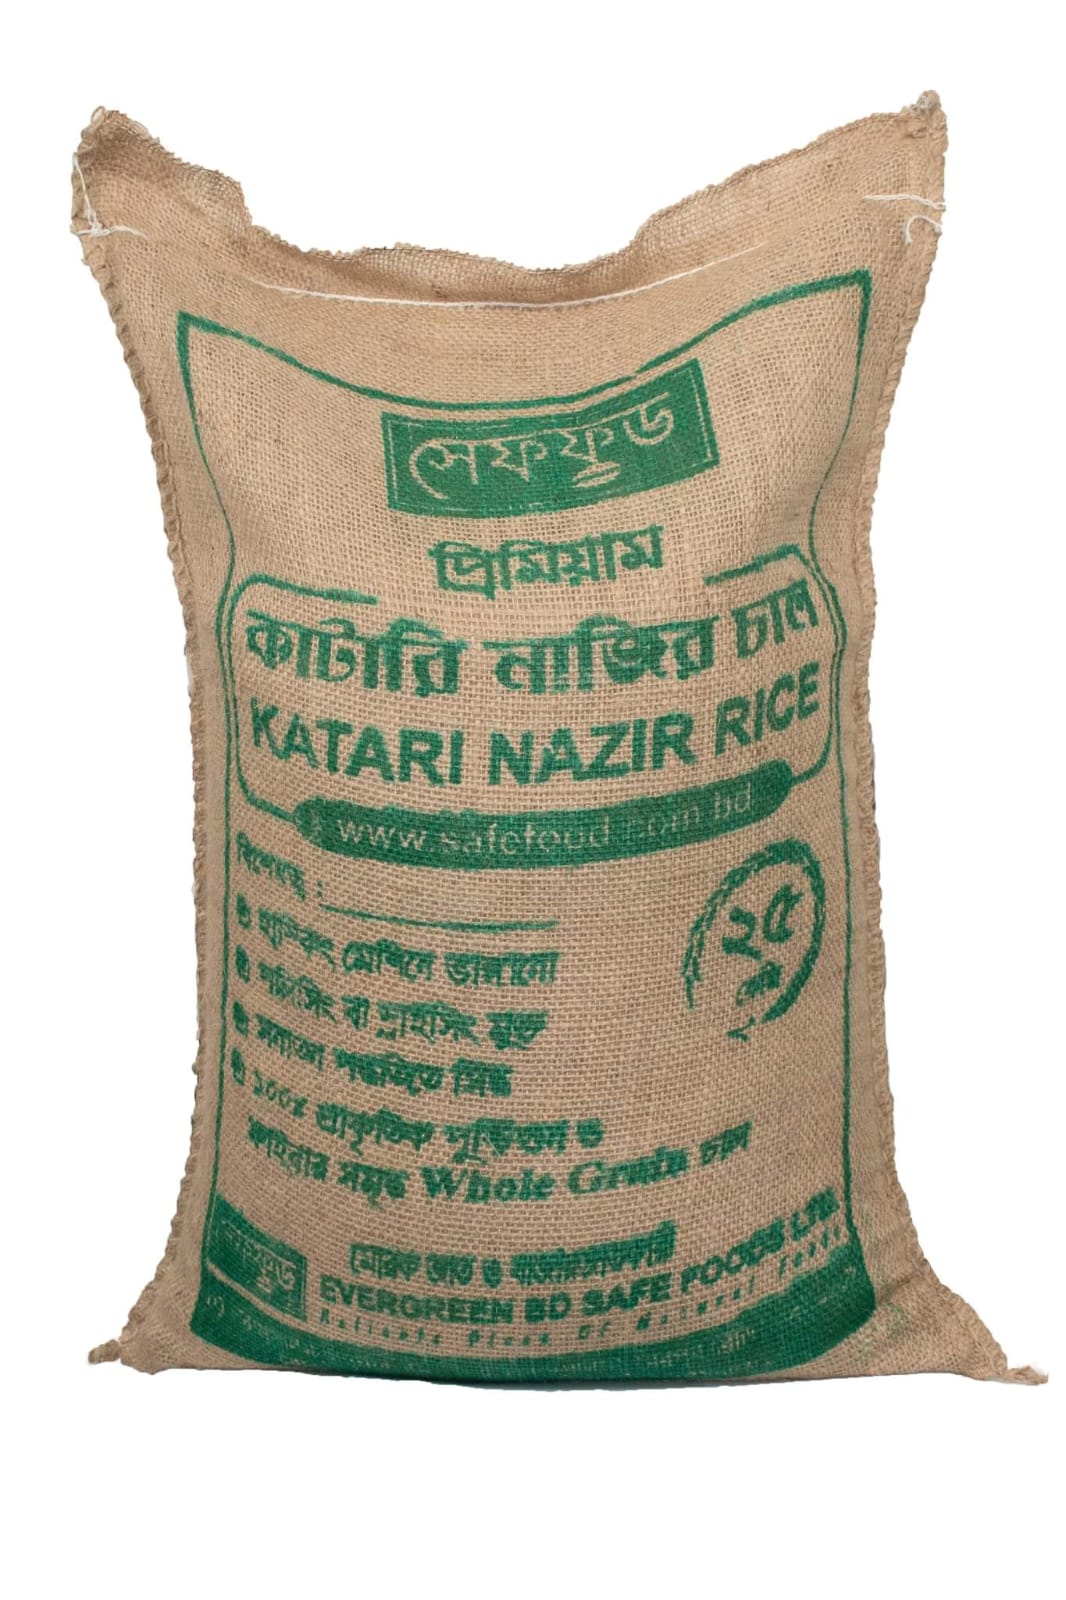 Katari Najir Rice Premium (কাটারী নাজির চাল)